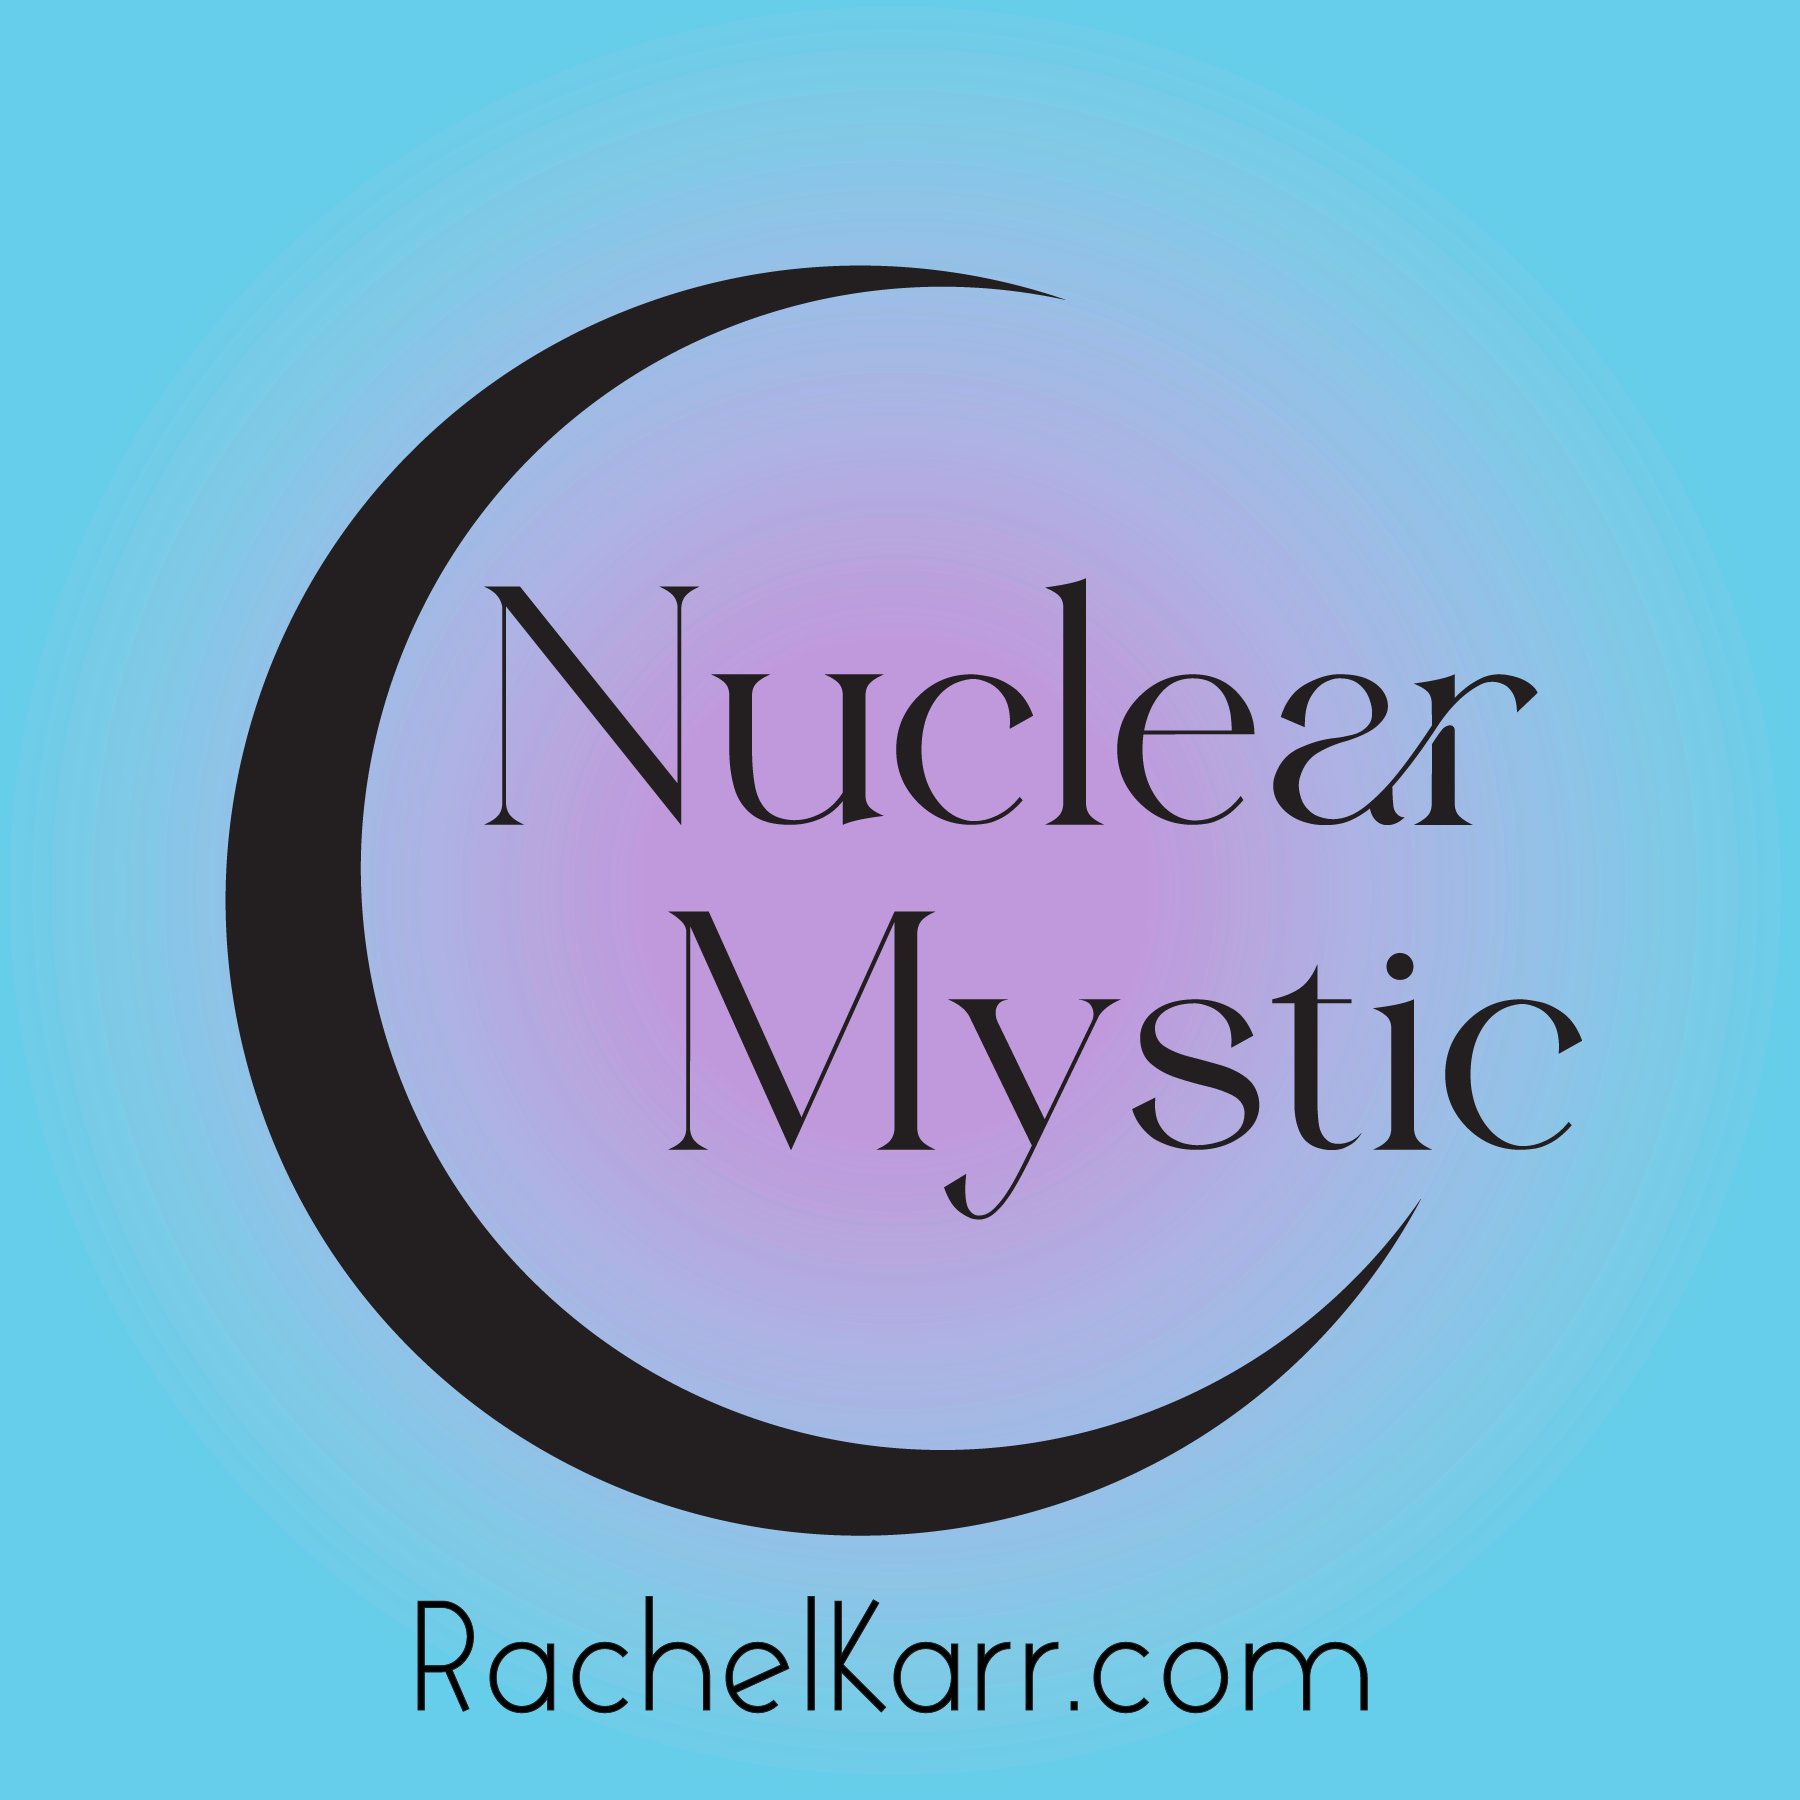 Nuclear Mystic